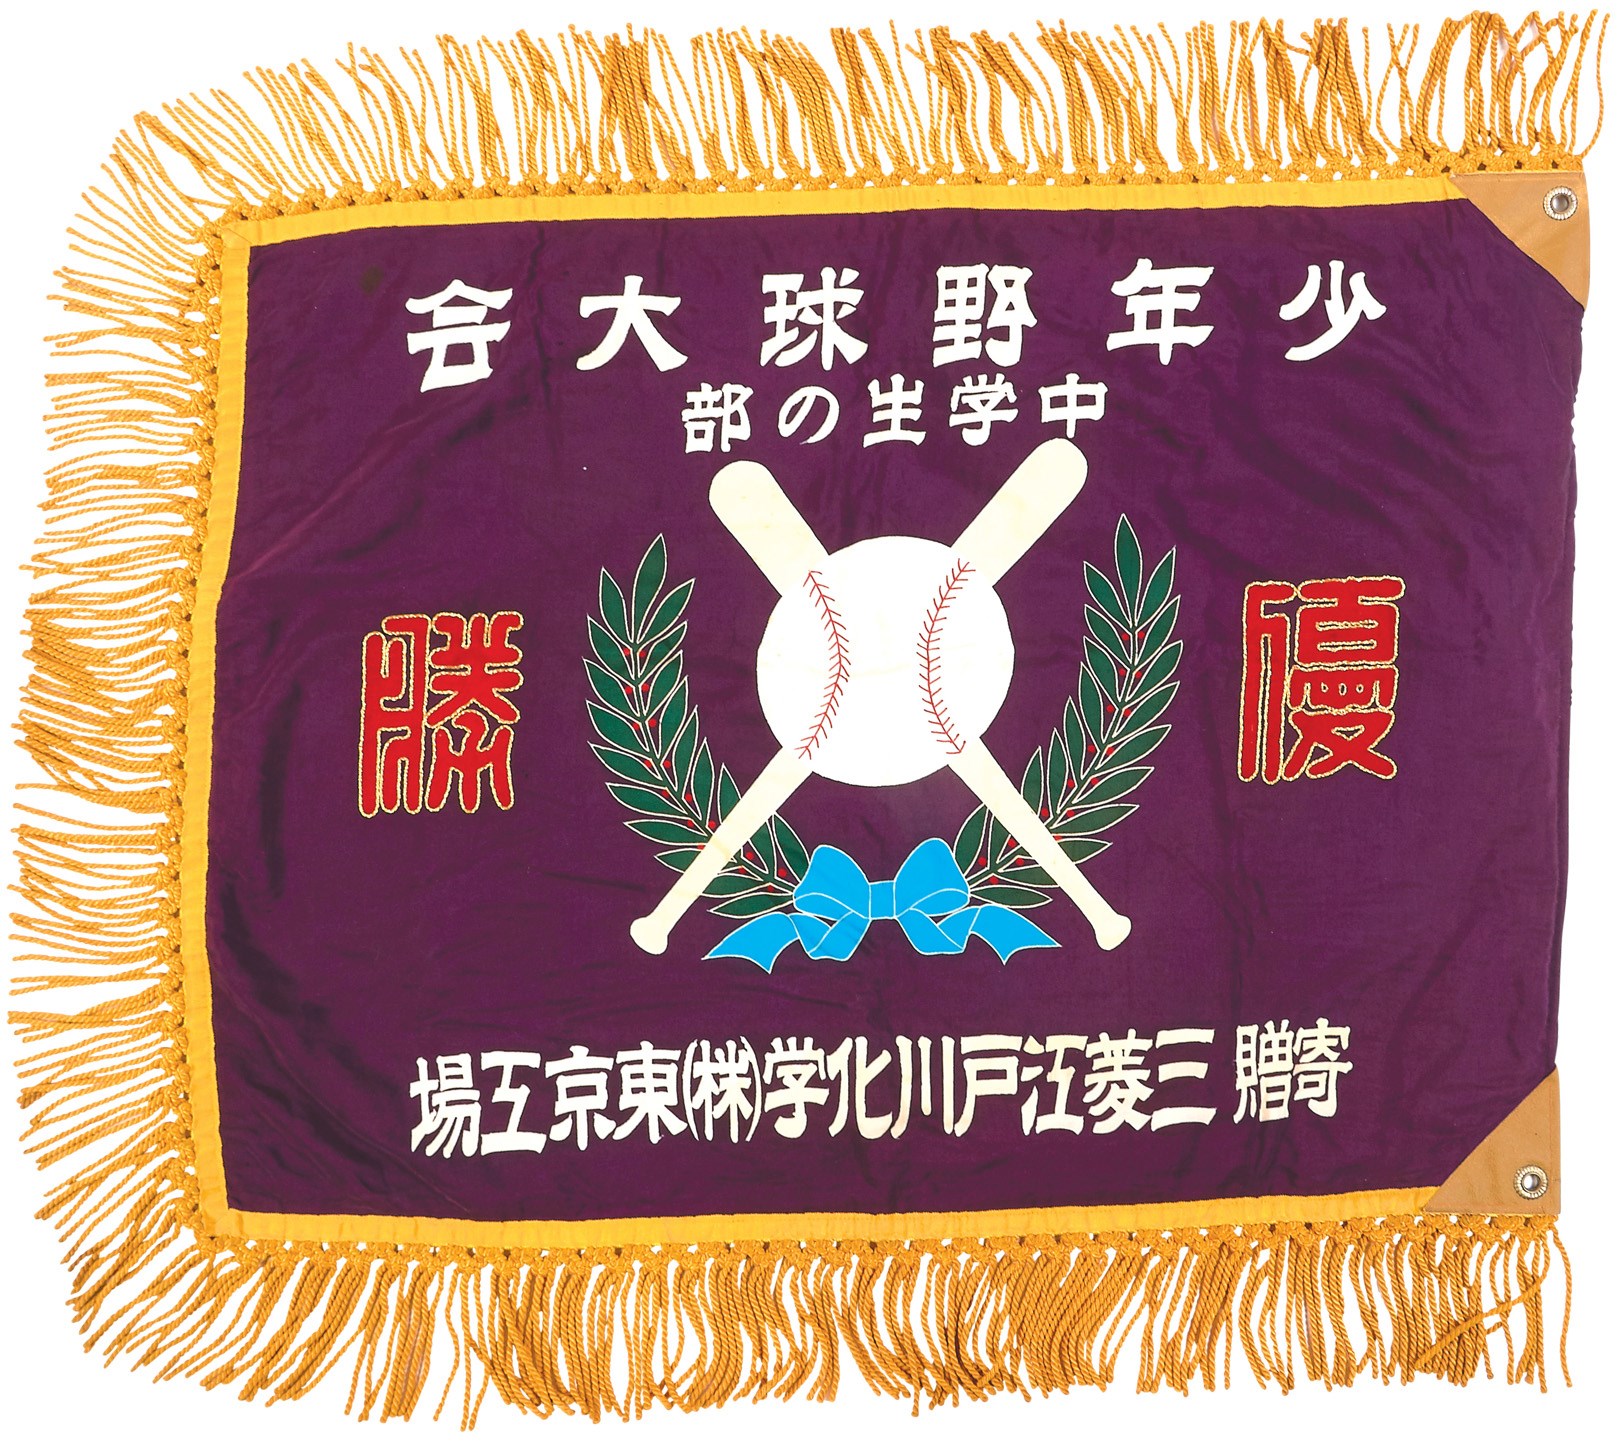 Negro League, Latin, Japanese & International Base - 1960s Mitsubishi Toyota Youth Baseball Tournament Banner